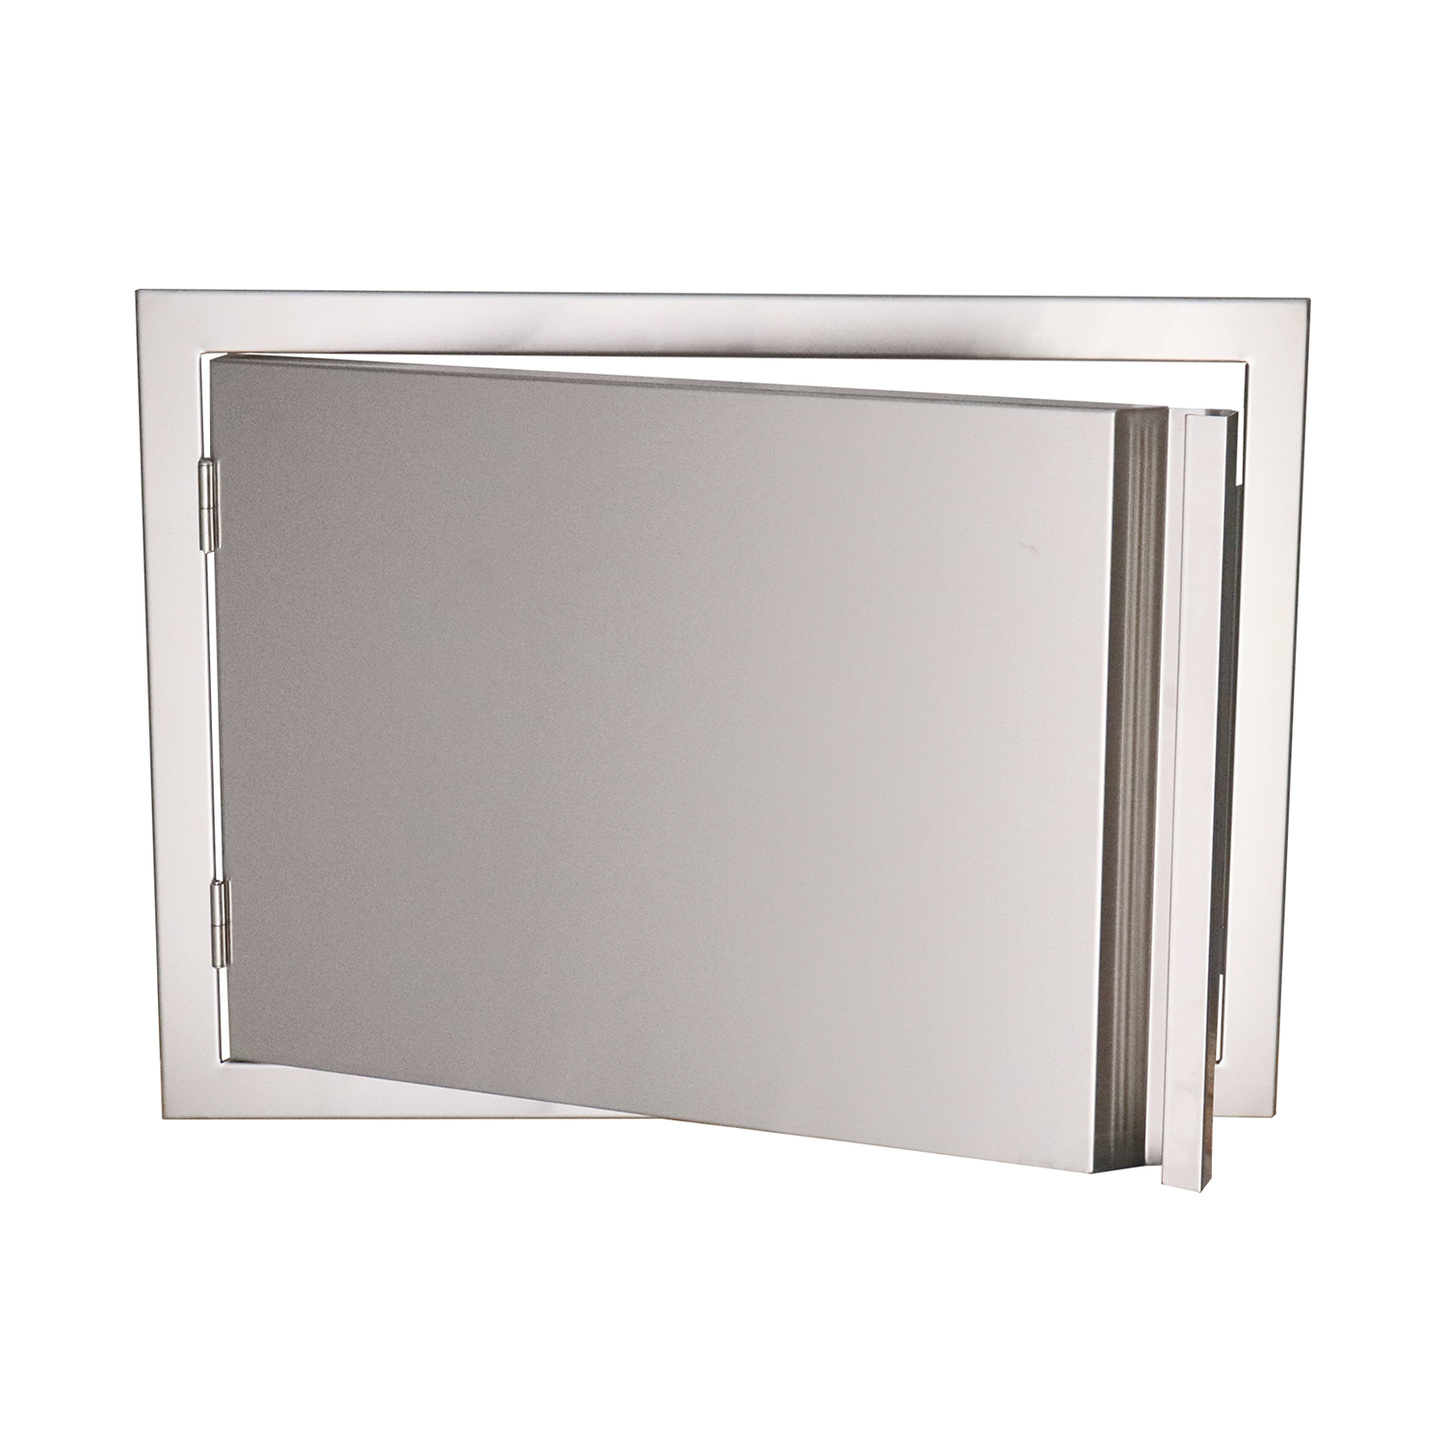 RCS Valiant Series 27-Inch Stainless Steel Horizontal Single Access Door - VDH1